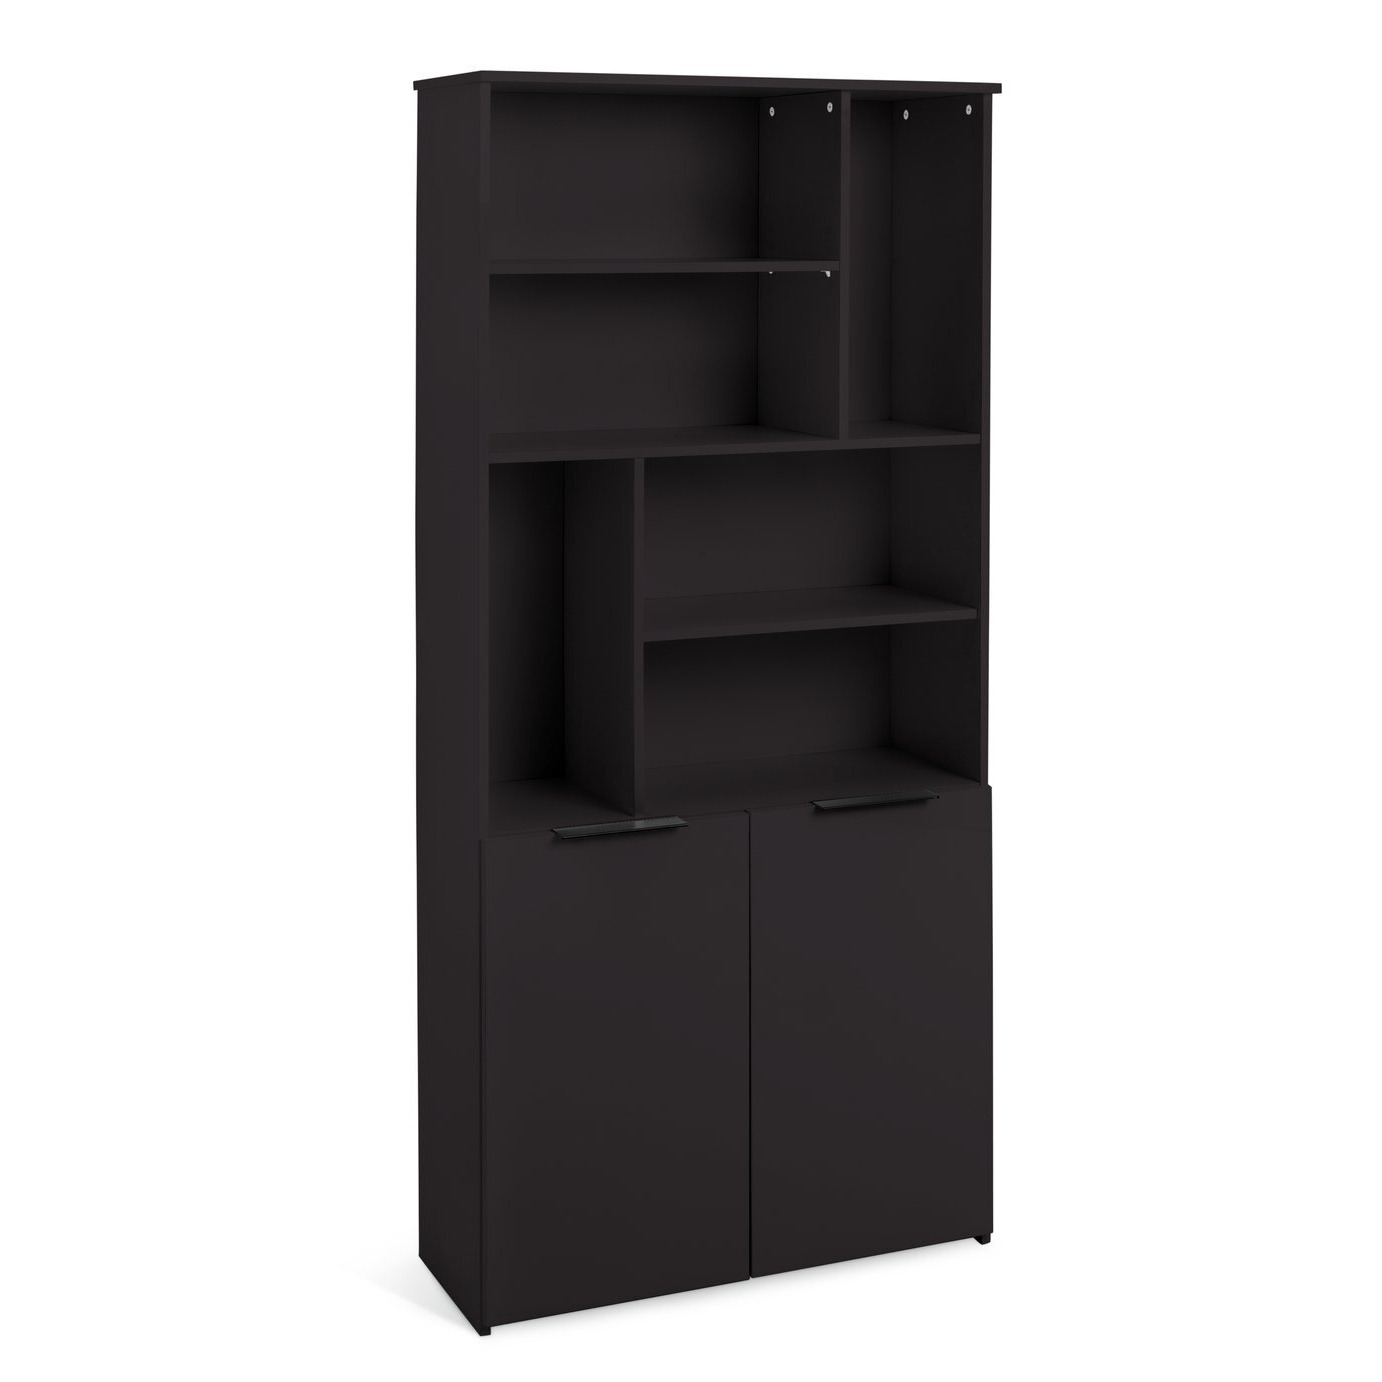 Habitat Hayward Tall Bookcase - Gloss Black - image 1